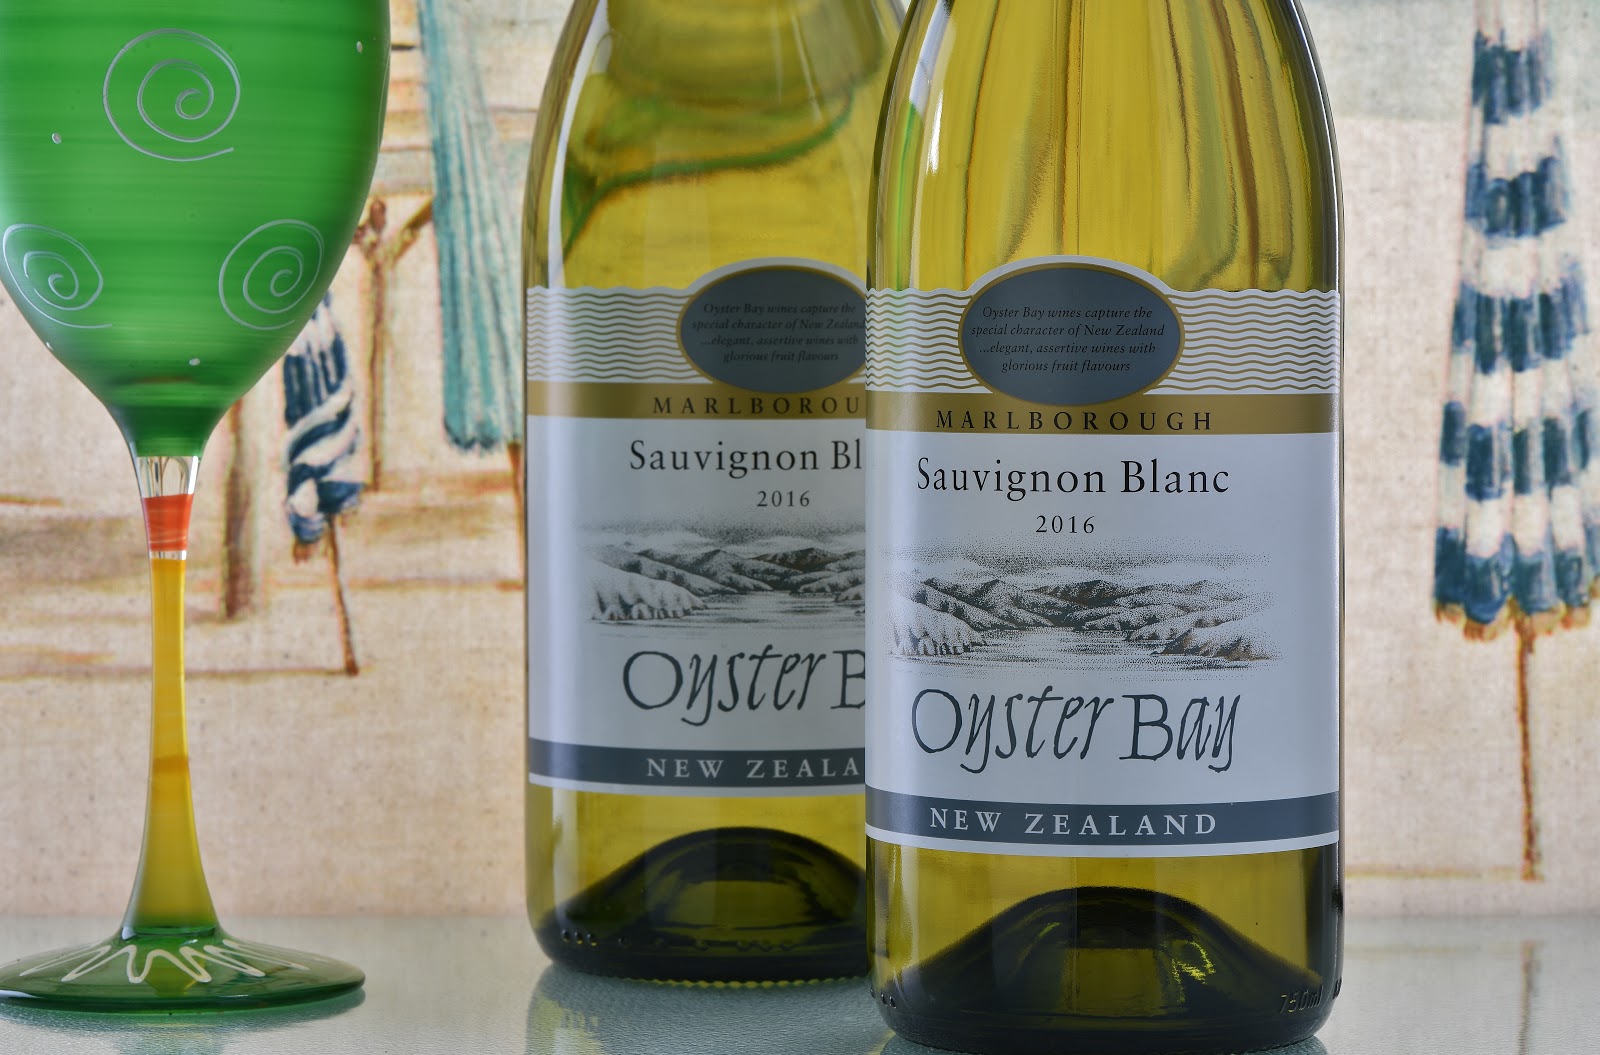 Sauvignon new zealand. Вино Oyster Bay Sauvignon Blanc. Sauvignon Blanc New Zealand красное. Вино Oyster Bay, Marlborough.